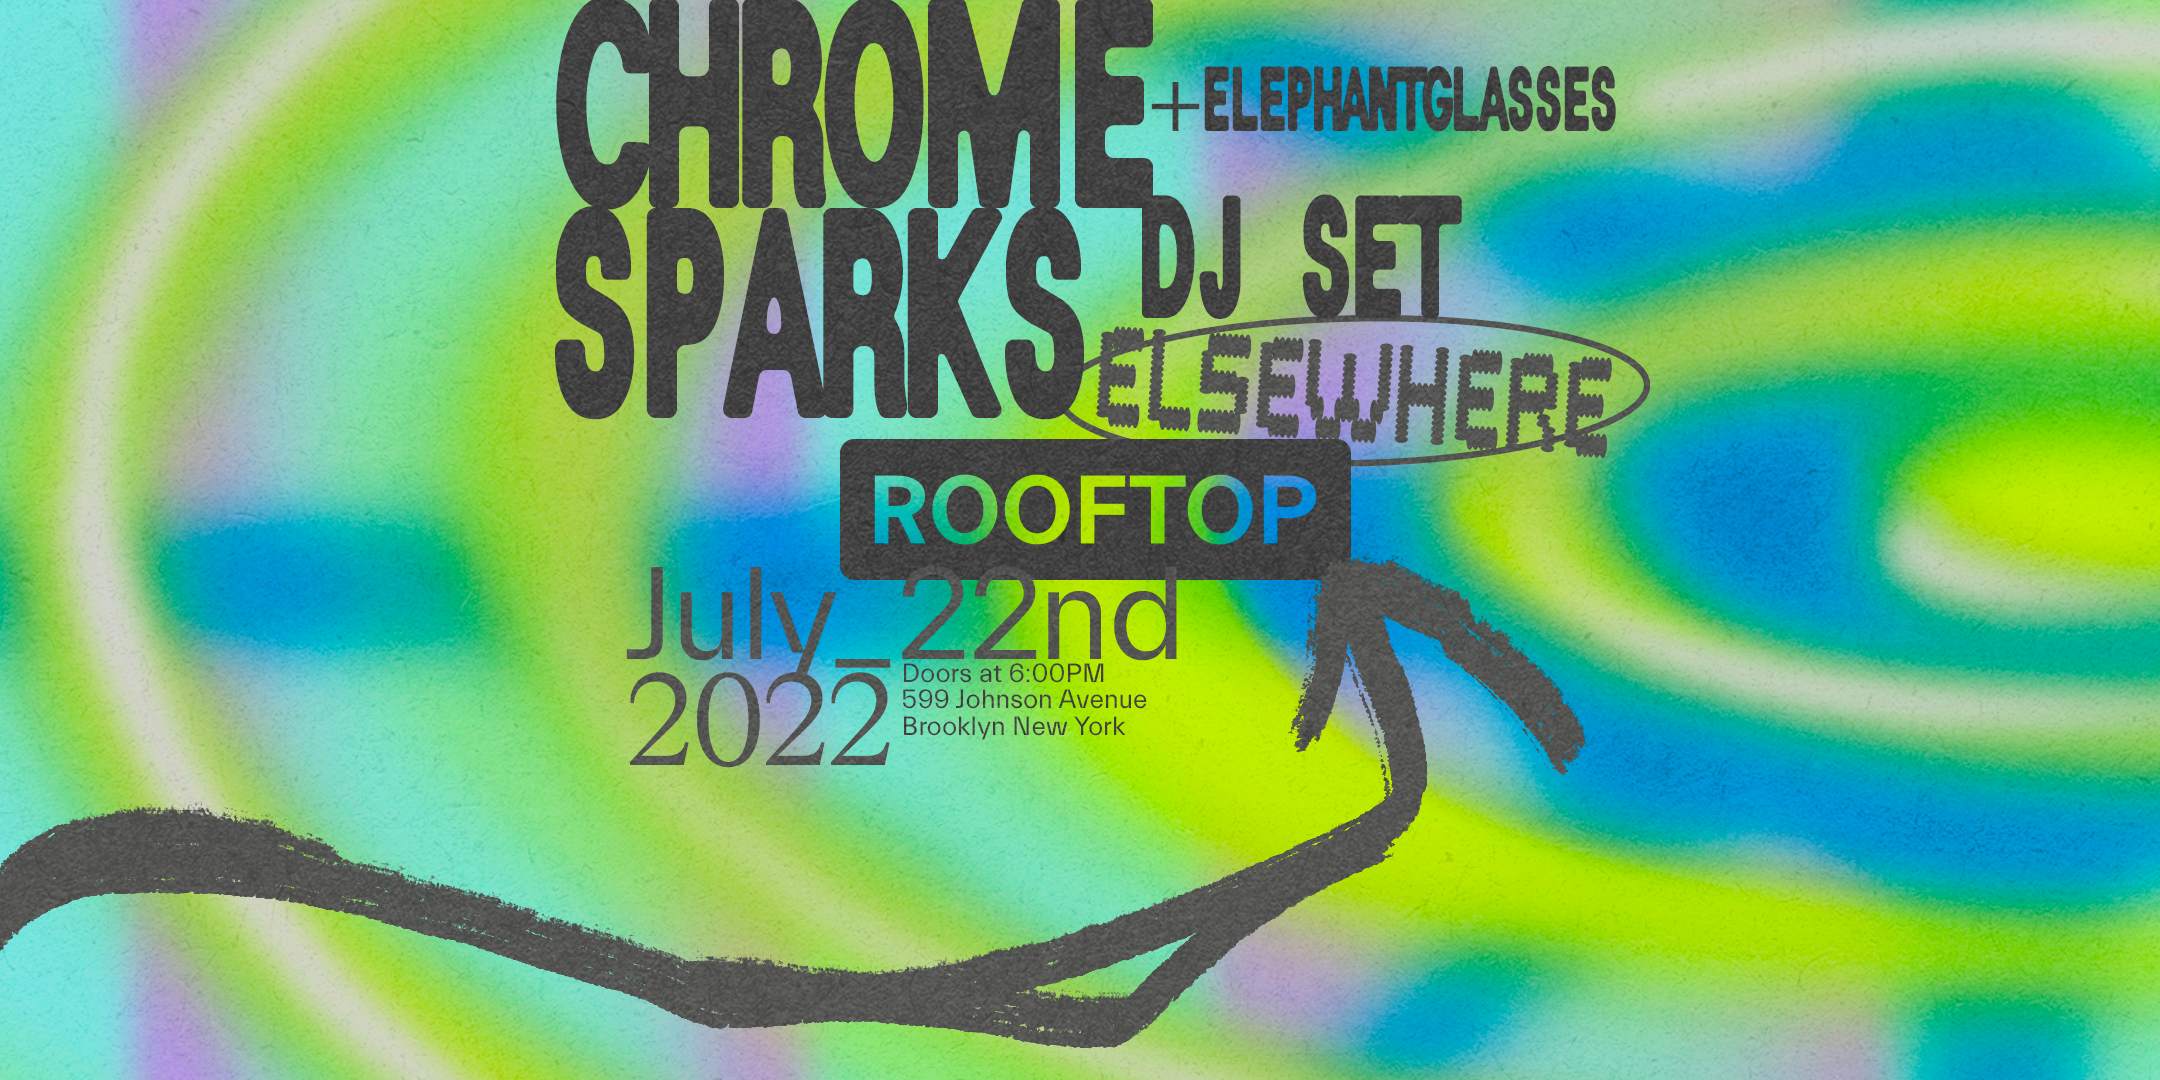 Chrome Sparks (DJ Set), Elephantglasses - Página frontal